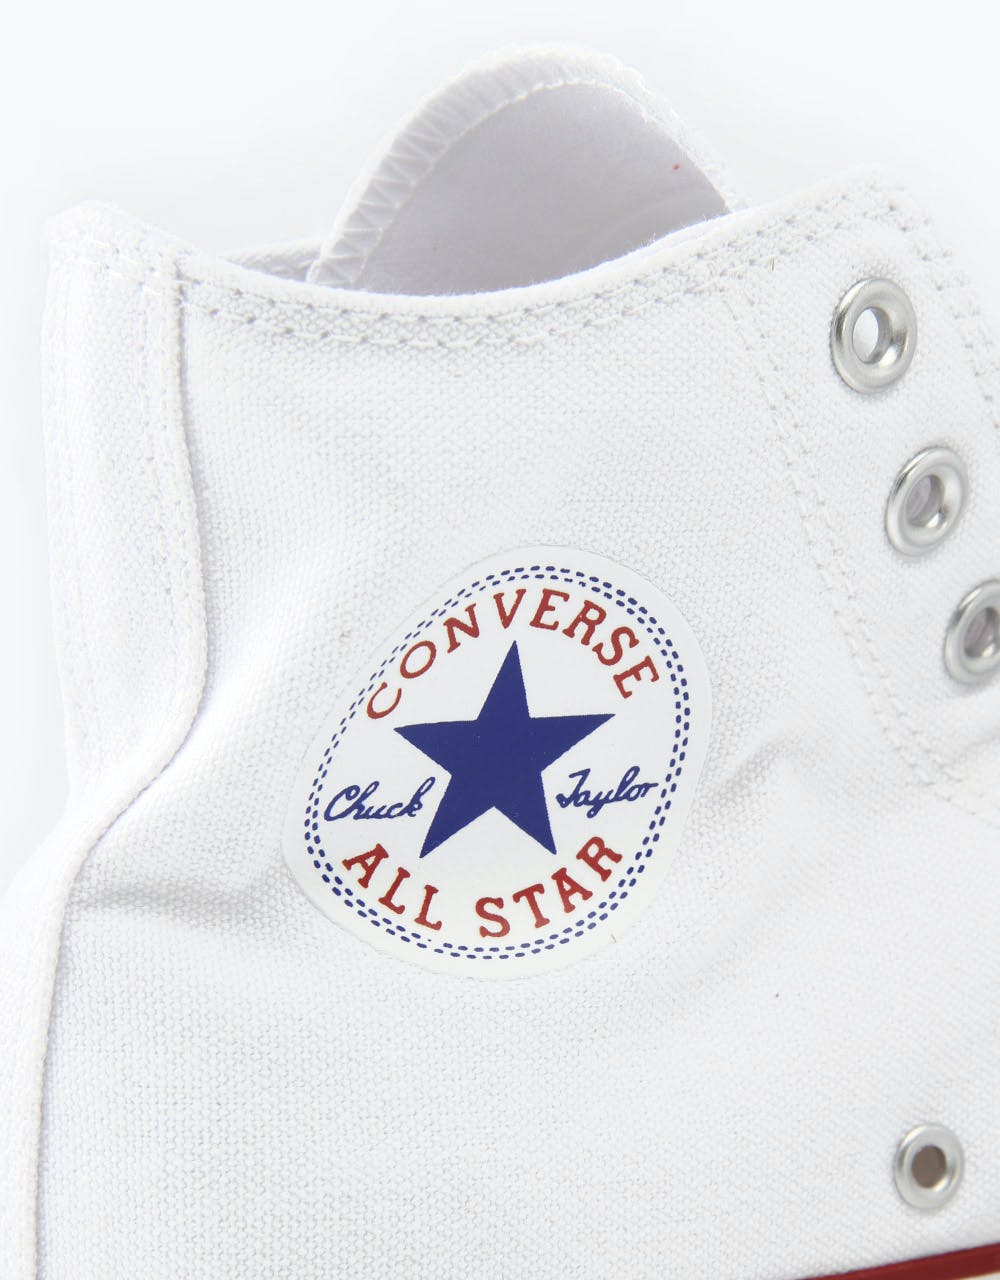 Converse All Star Hi-Top Trainers - Optical White